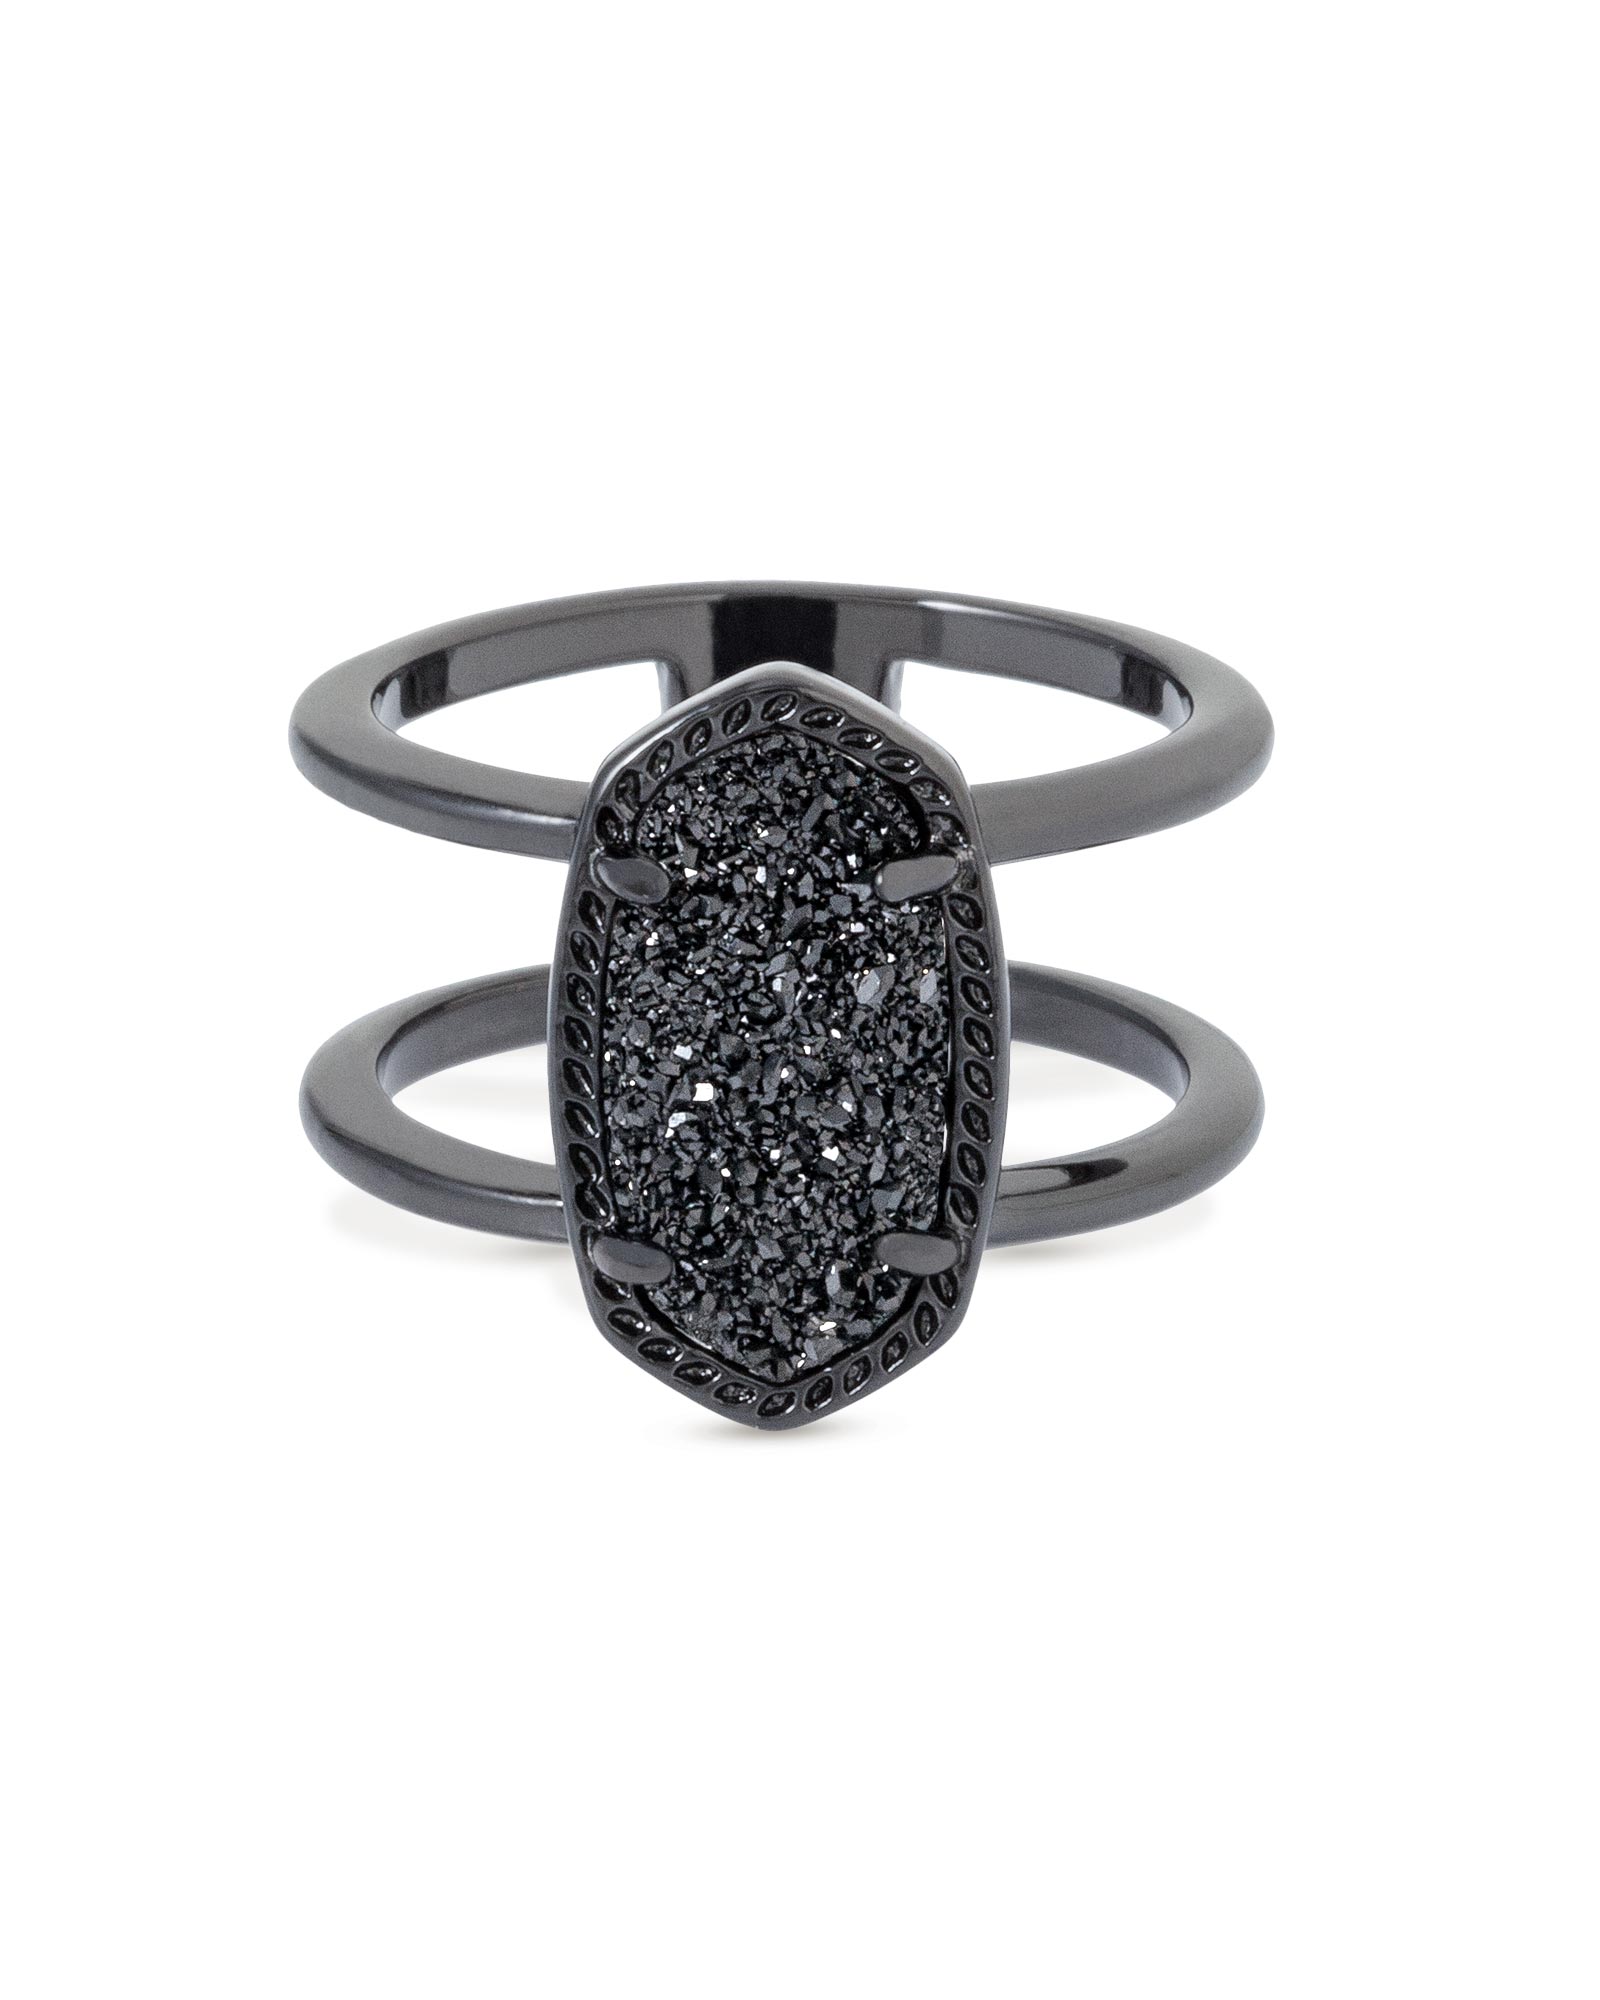 Elyse Double Band Ring in Gunmetal | Kendra Scott Jewelry